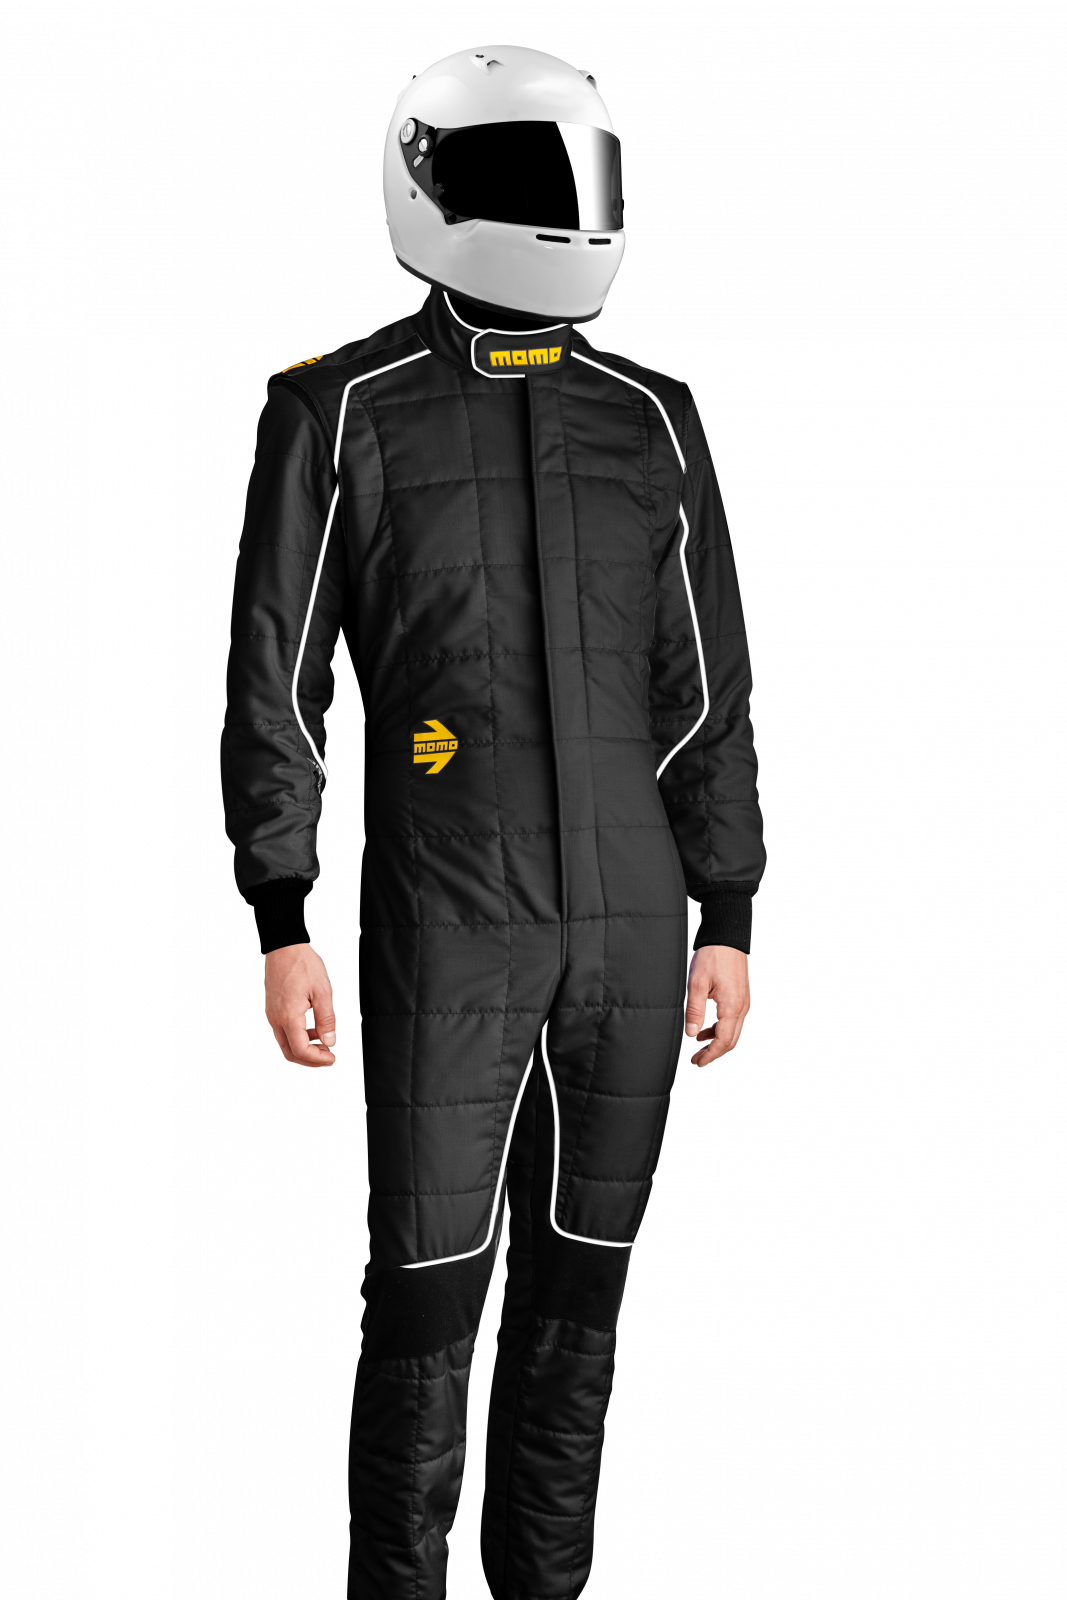 MOMO Corsa Evo Black Size 50 Racing Suit TUCOEVOBLK50